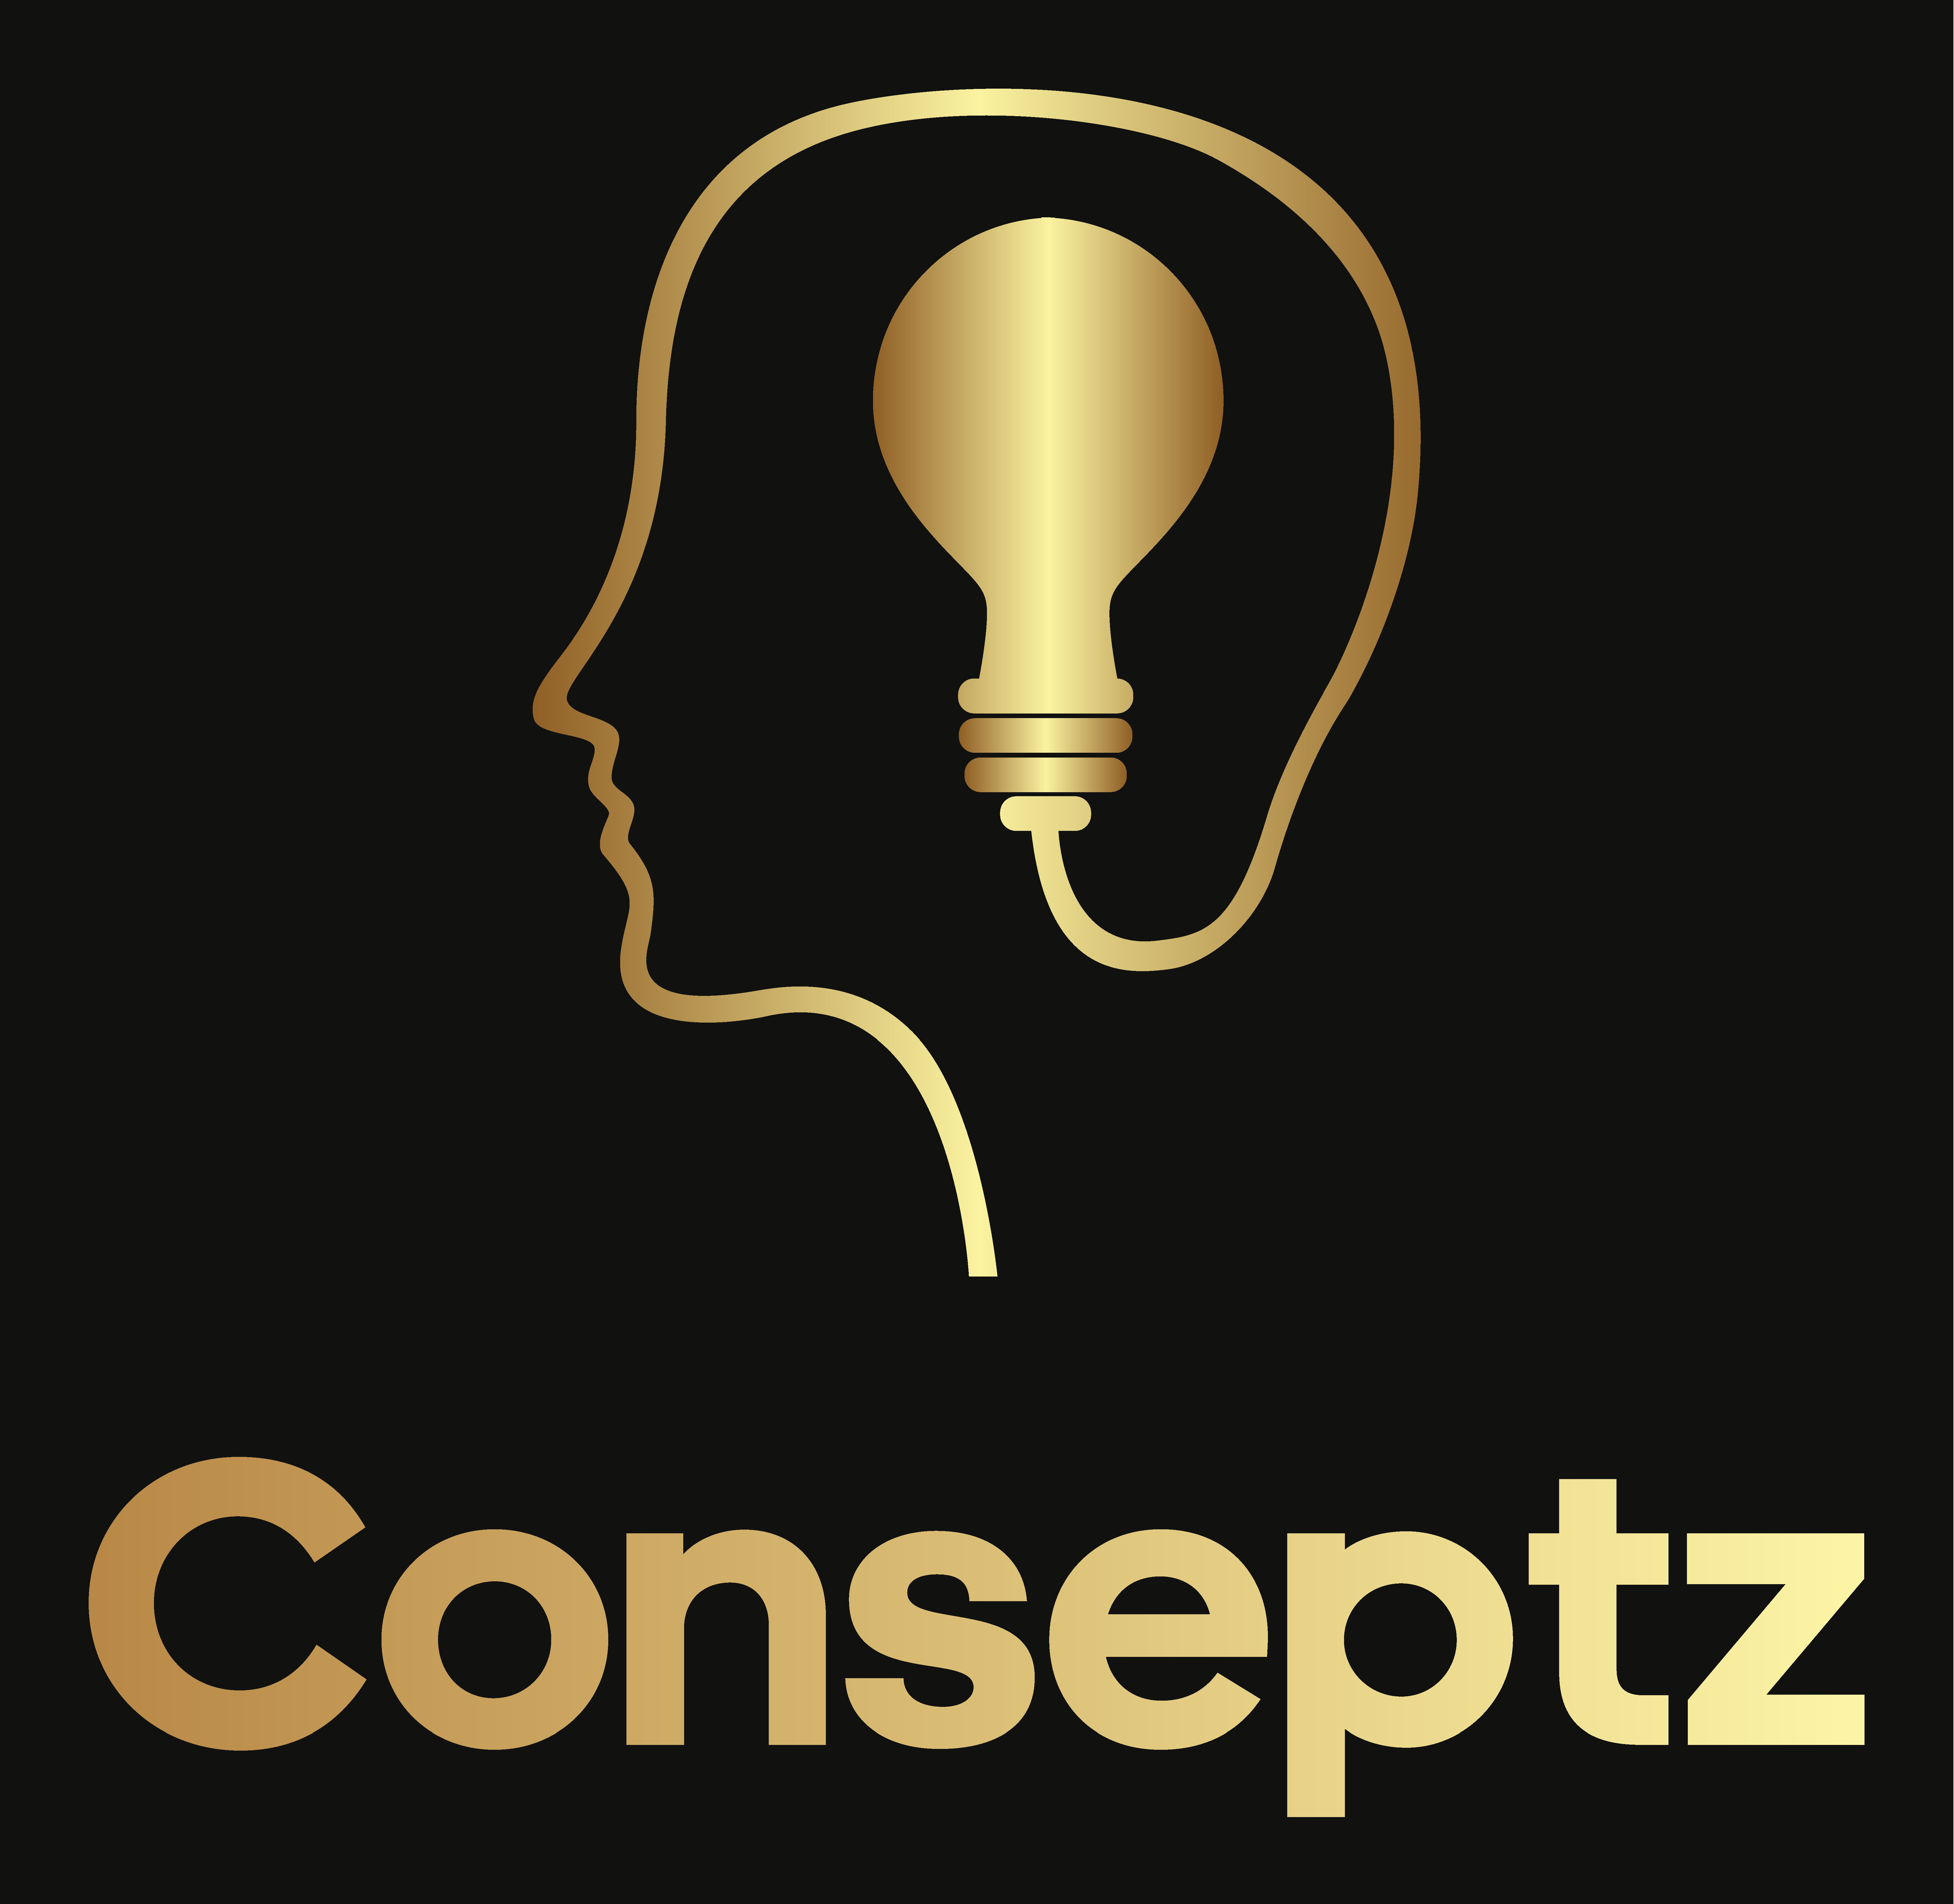 Conseptz’s logo